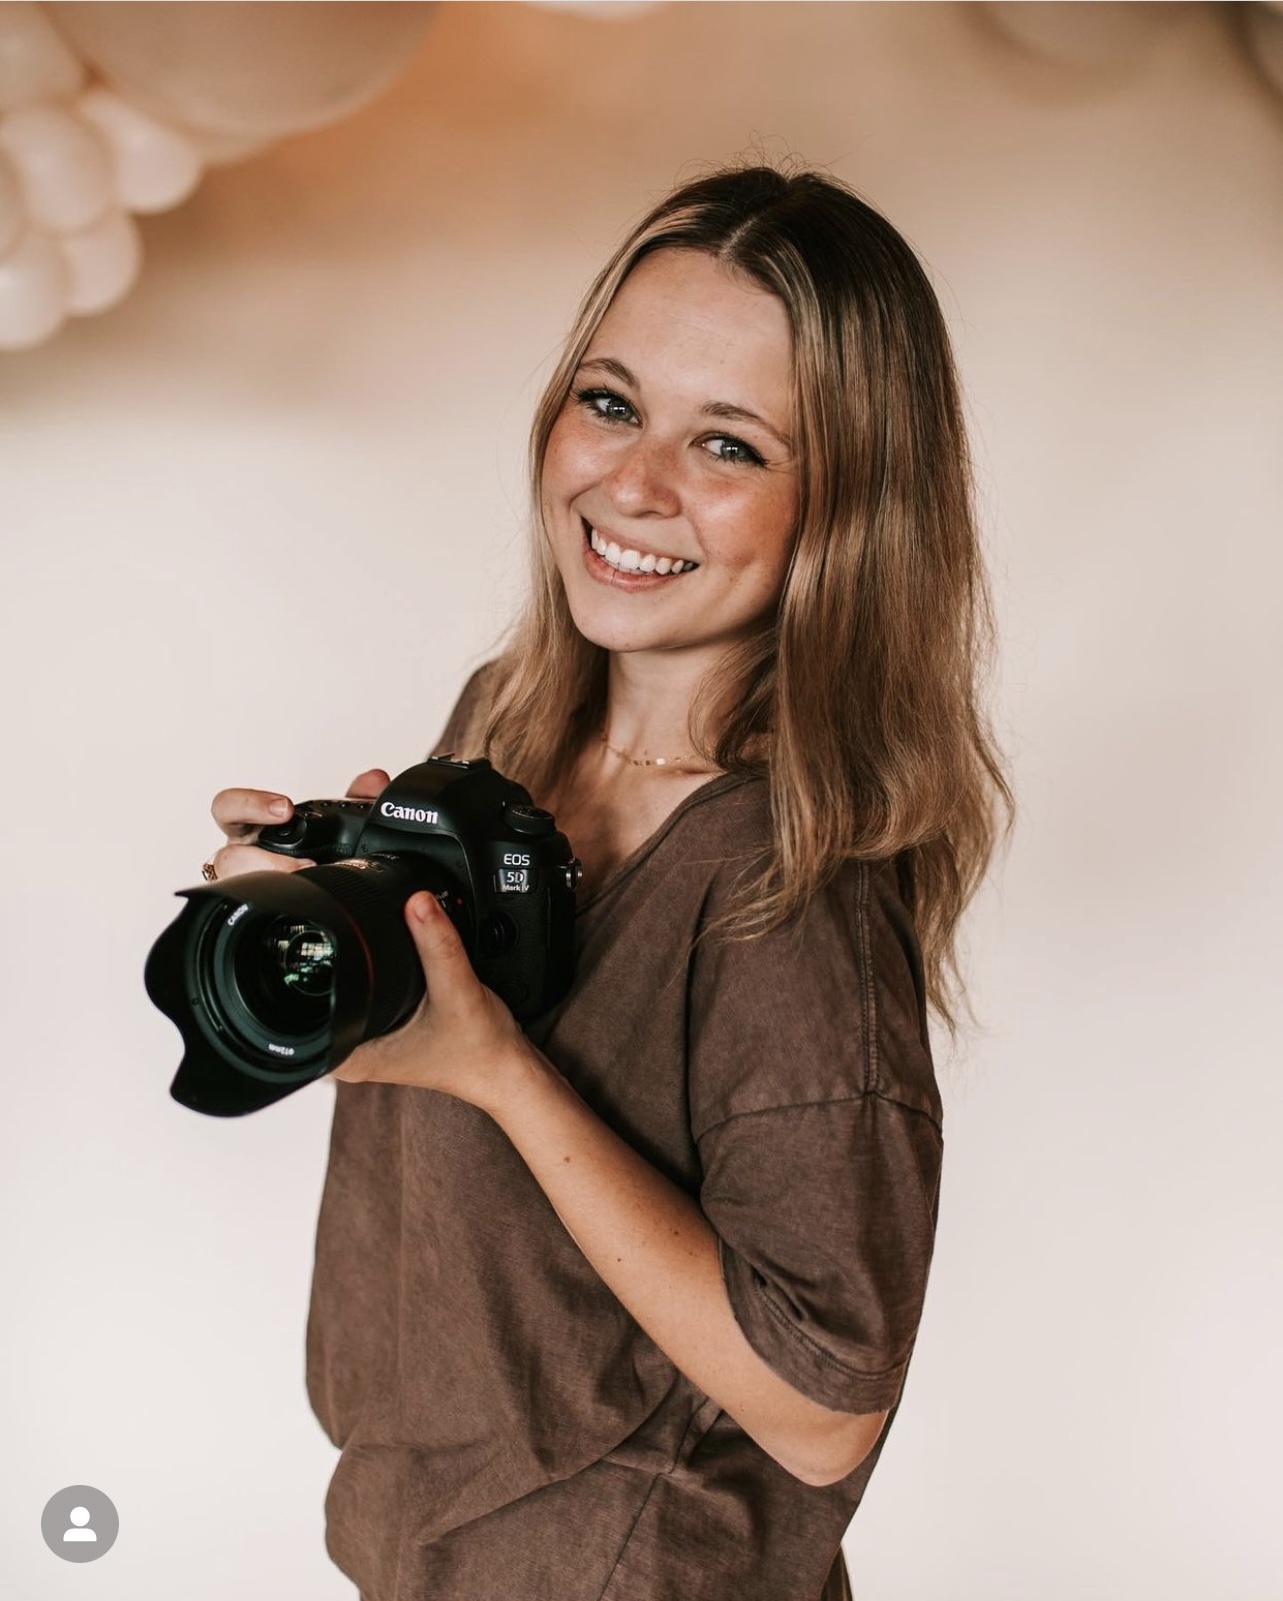 Missouri Wedding Photographer Bailey Morris holding a camera